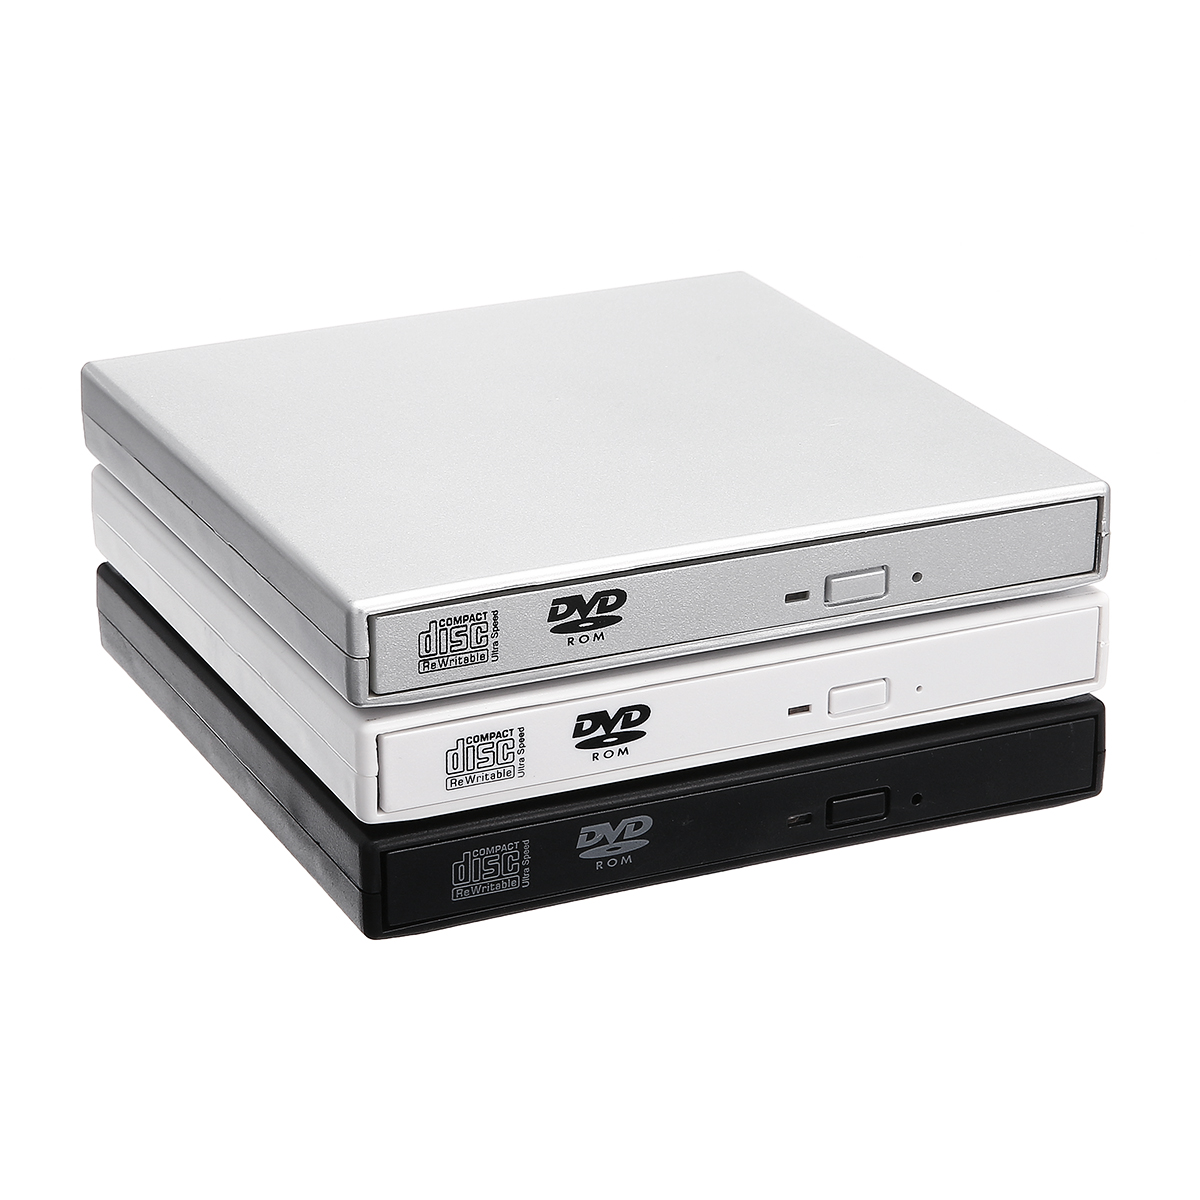 External-DVD-Optical-Drive-Combo-USB-20-CD-Burner-CDDVD-ROM-CD-RW-Player-Slim-Portable-Reader-Record-1968614-6